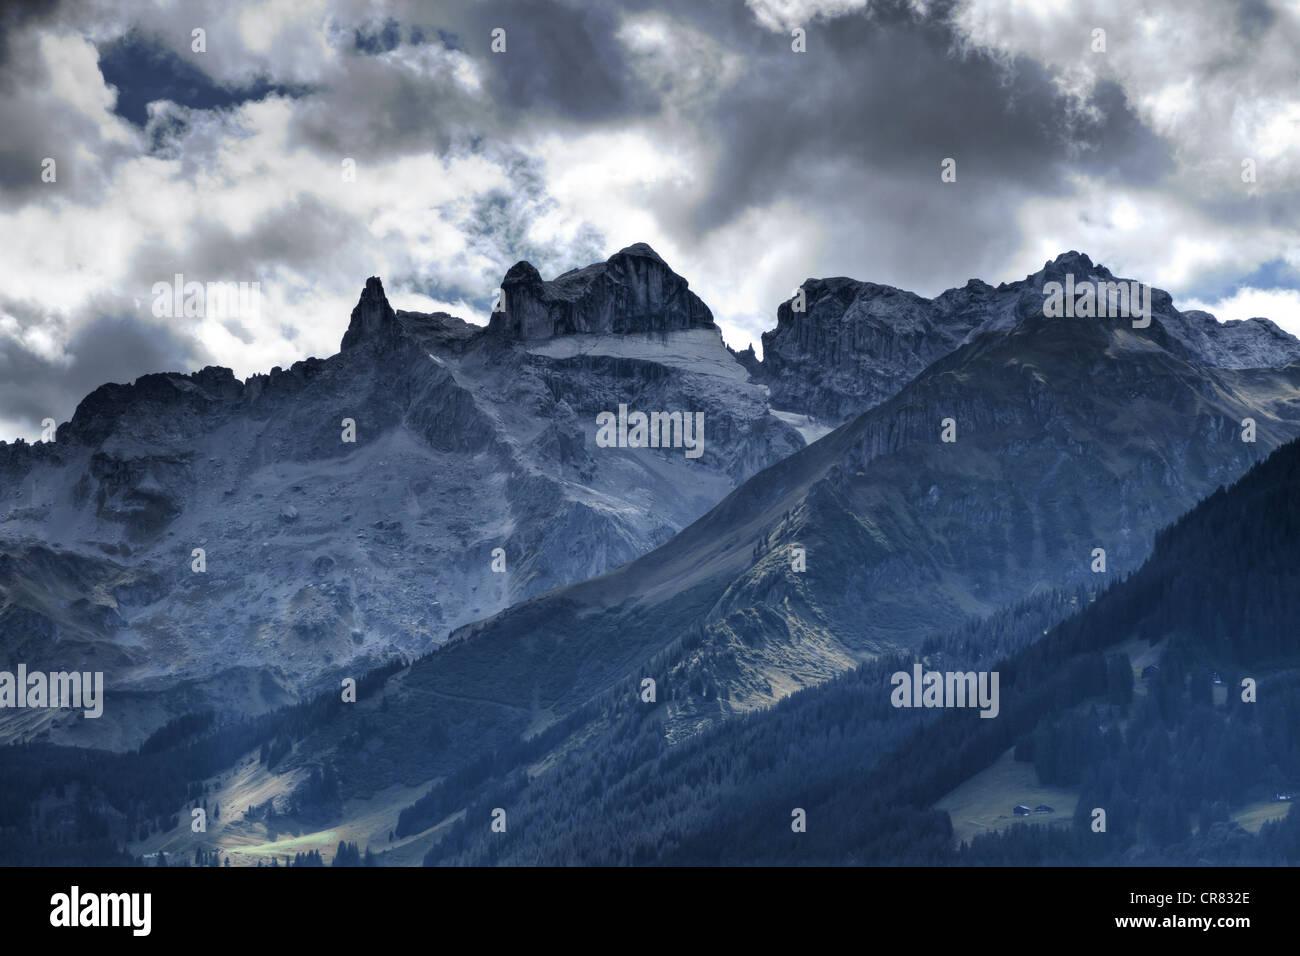 DRI Tuerm Berge, was bedeutet "drei Türme", Montafon, Raetikon Gebirge, Vorarlberg, Österreich, Europa Stockfoto